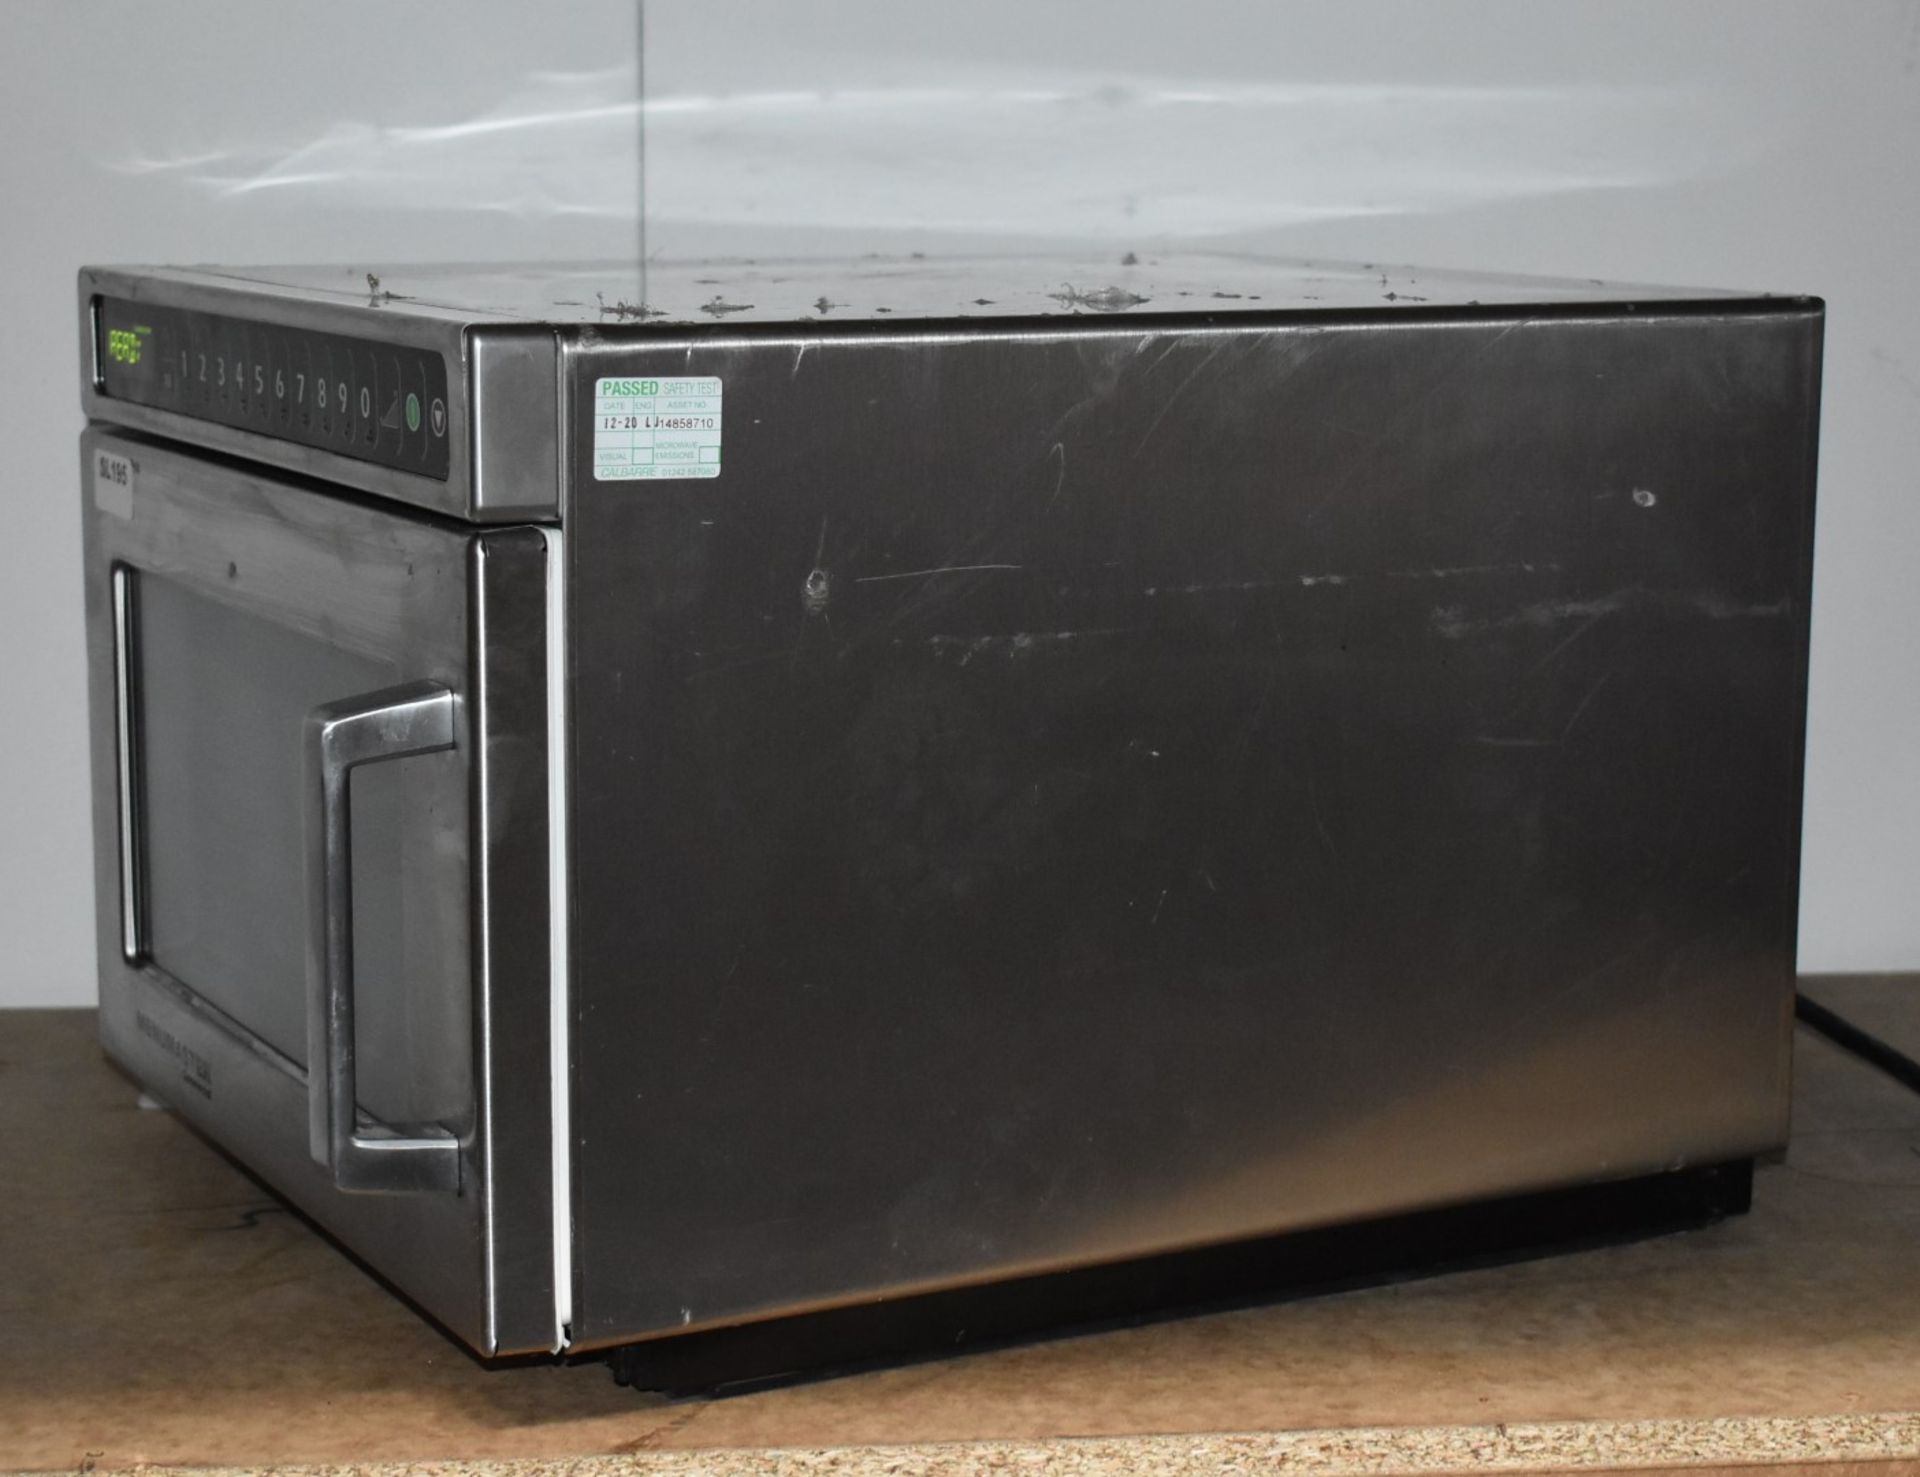 1 x Menumaster Commercial Microwave Oven - Model DEC14E2U - 1.4kW, 13A, 17Ltr - 2018 Model - - Image 5 of 12